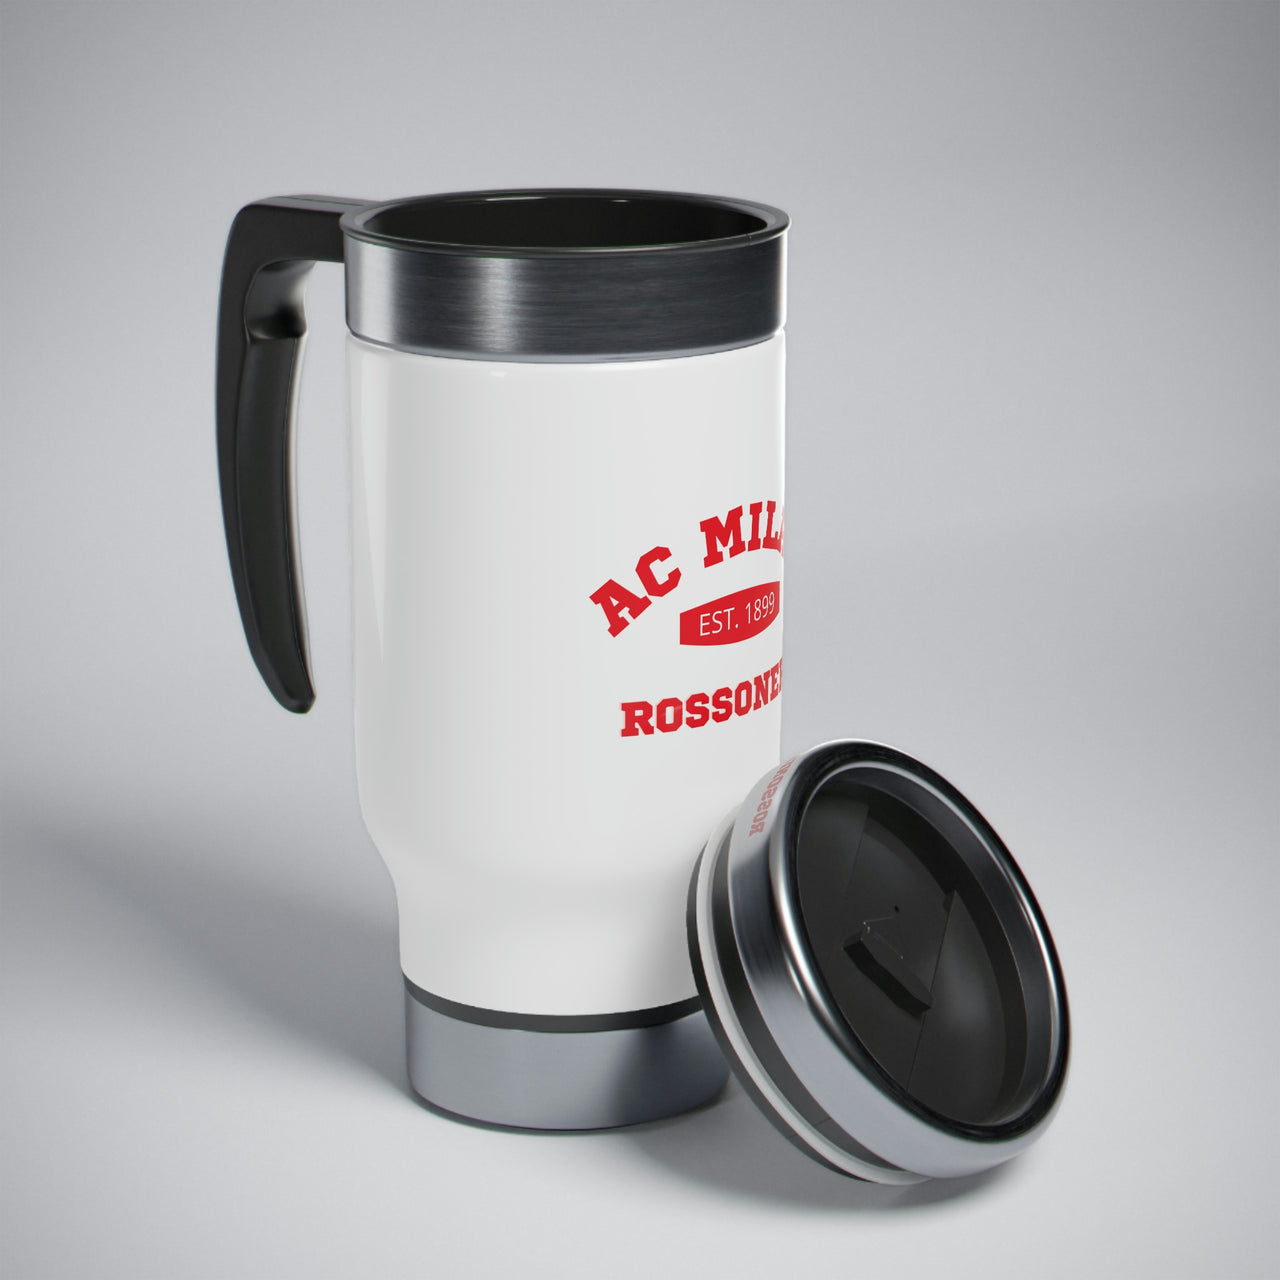 AC Milan Stainless Steel Travel Mug with Handle, 14oz